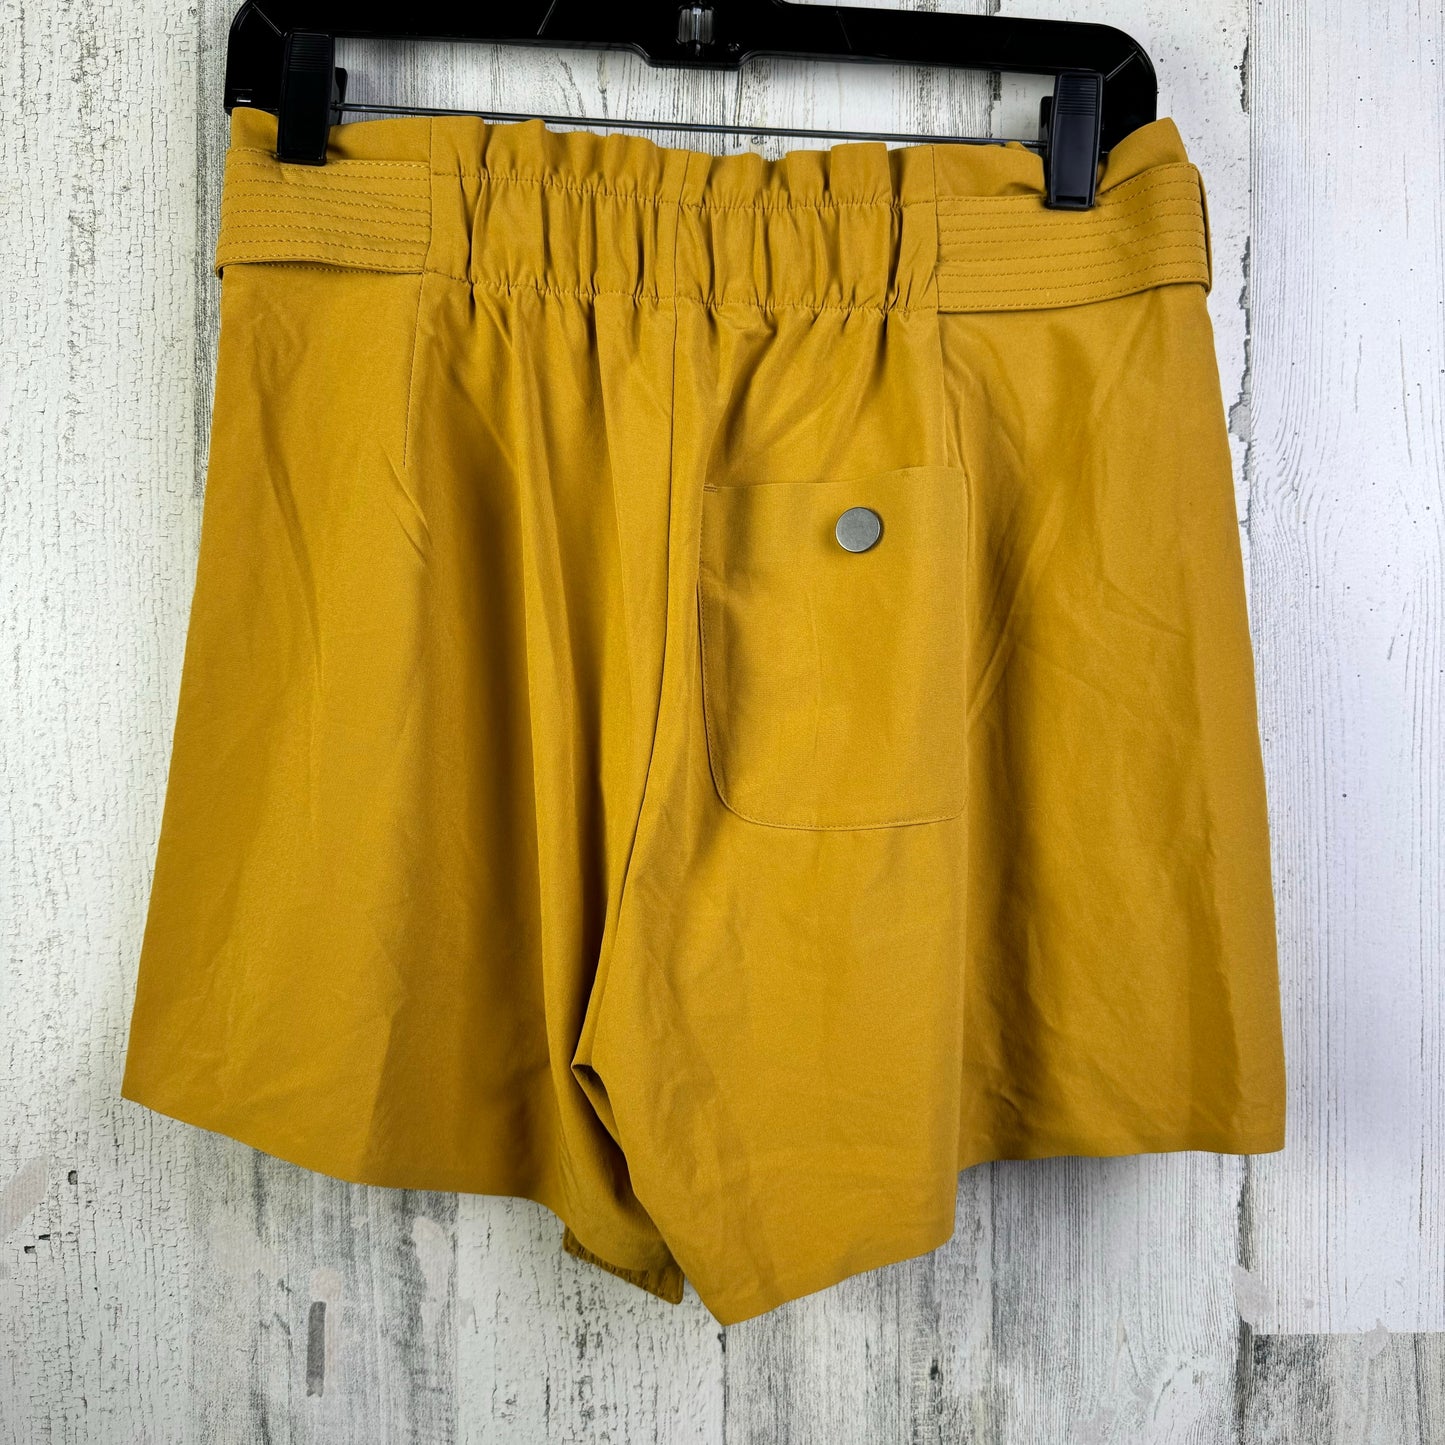 Yellow Shorts Athleta, Size 2